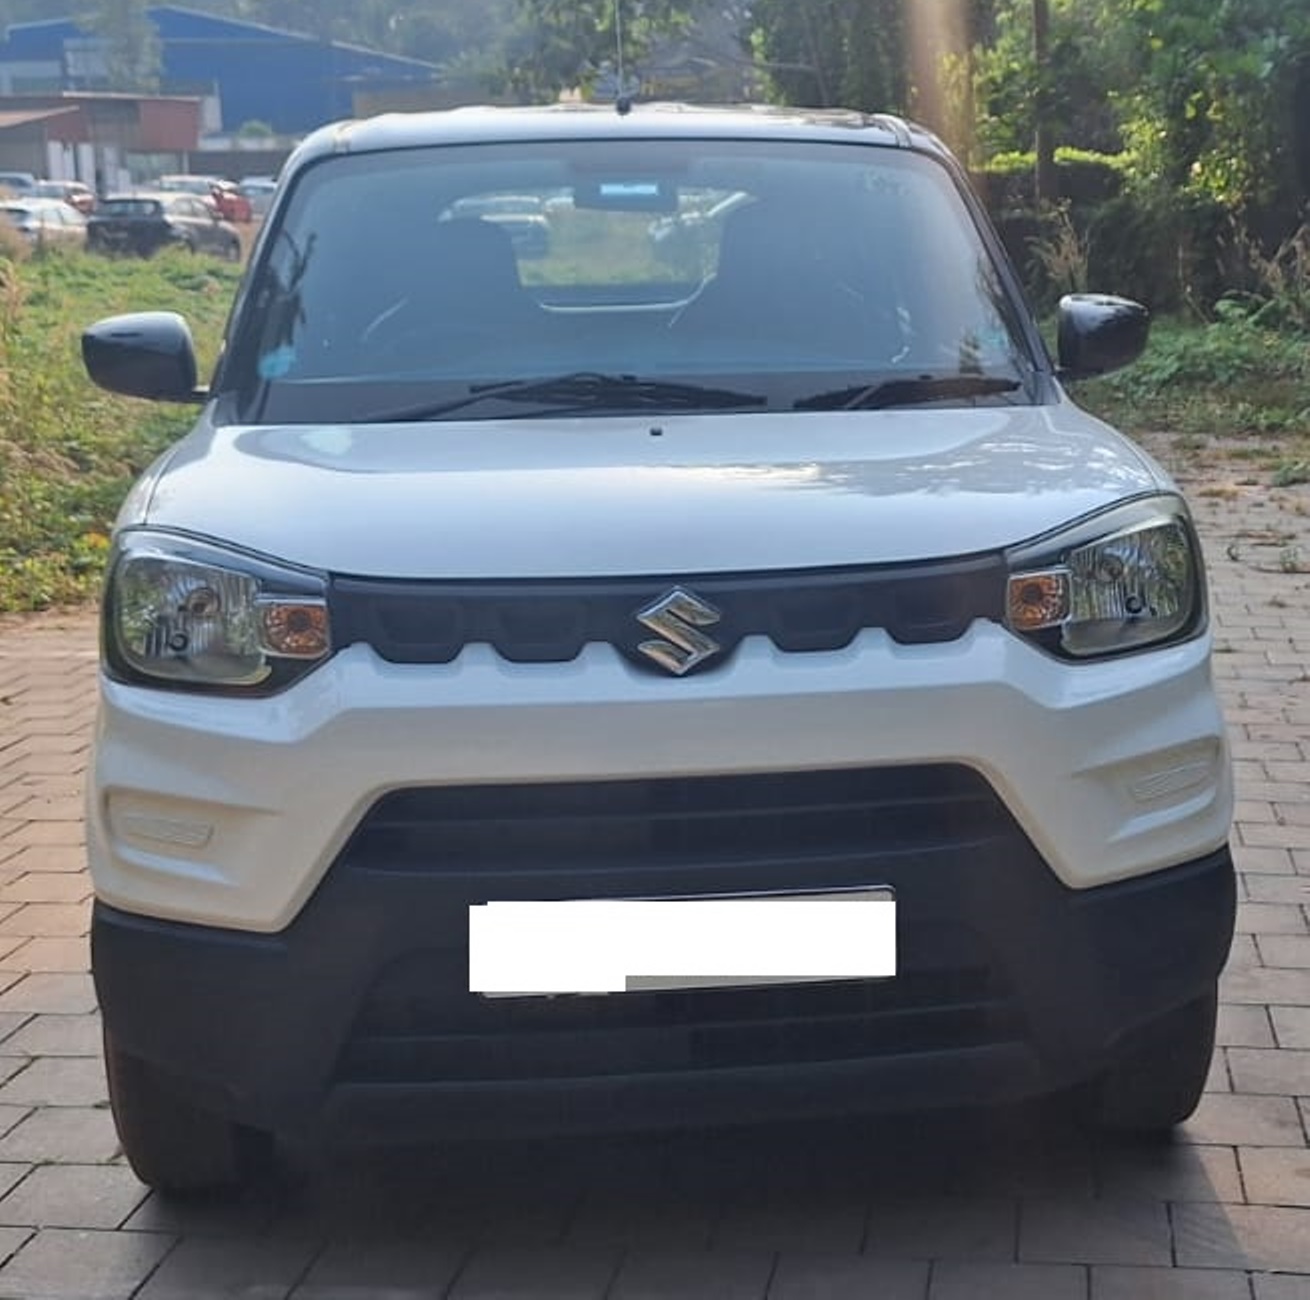 MARUTI S PRESSO 2019 Second-hand Car for Sale in Kannur